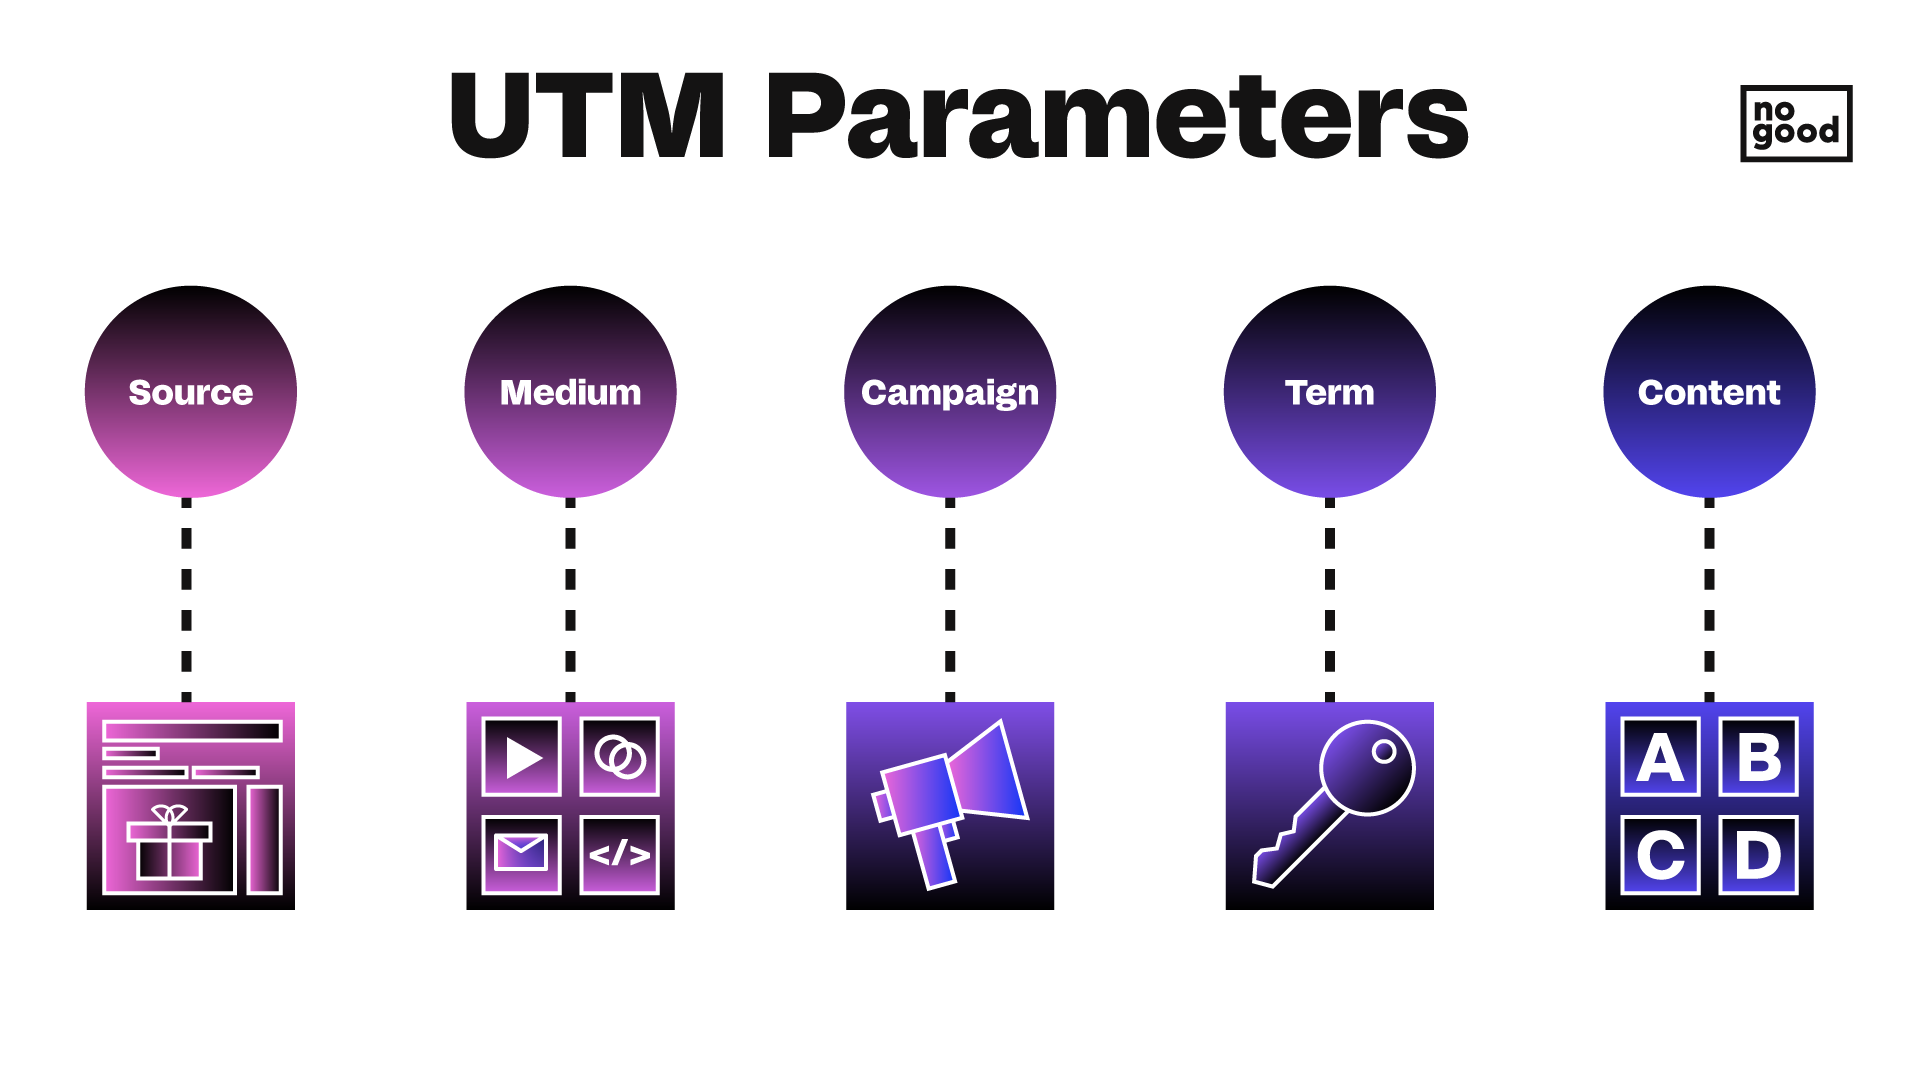 How to build a UTM / UTM Parameters